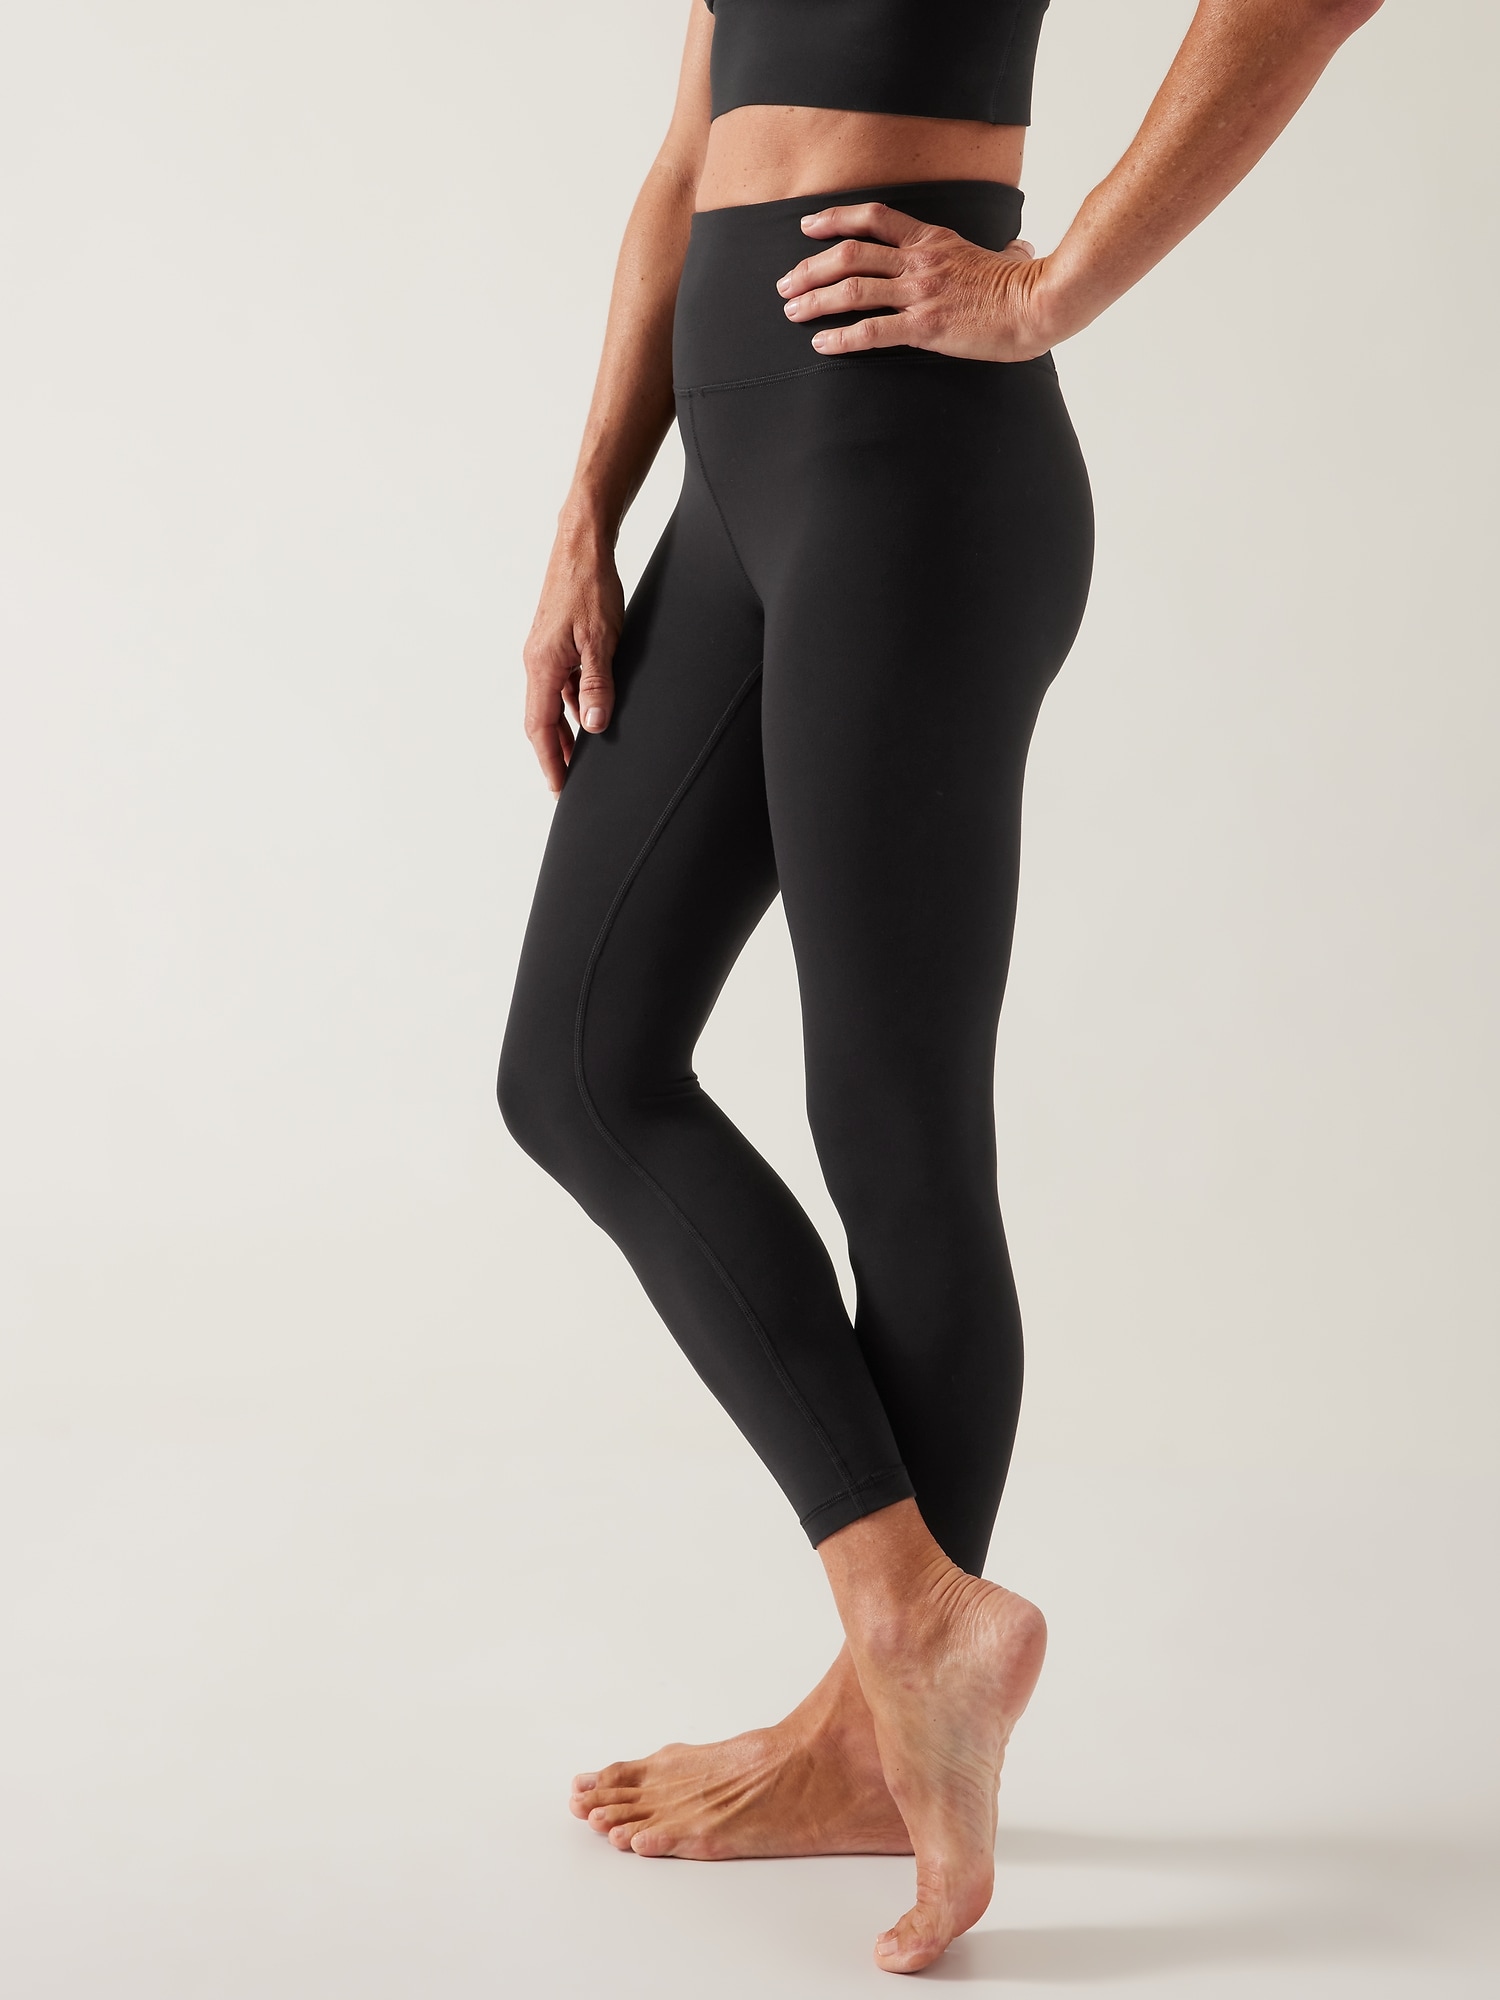 Banana Republic XS Leggings 7/8 Length Pant Compression Pink Legging  Workout Gym